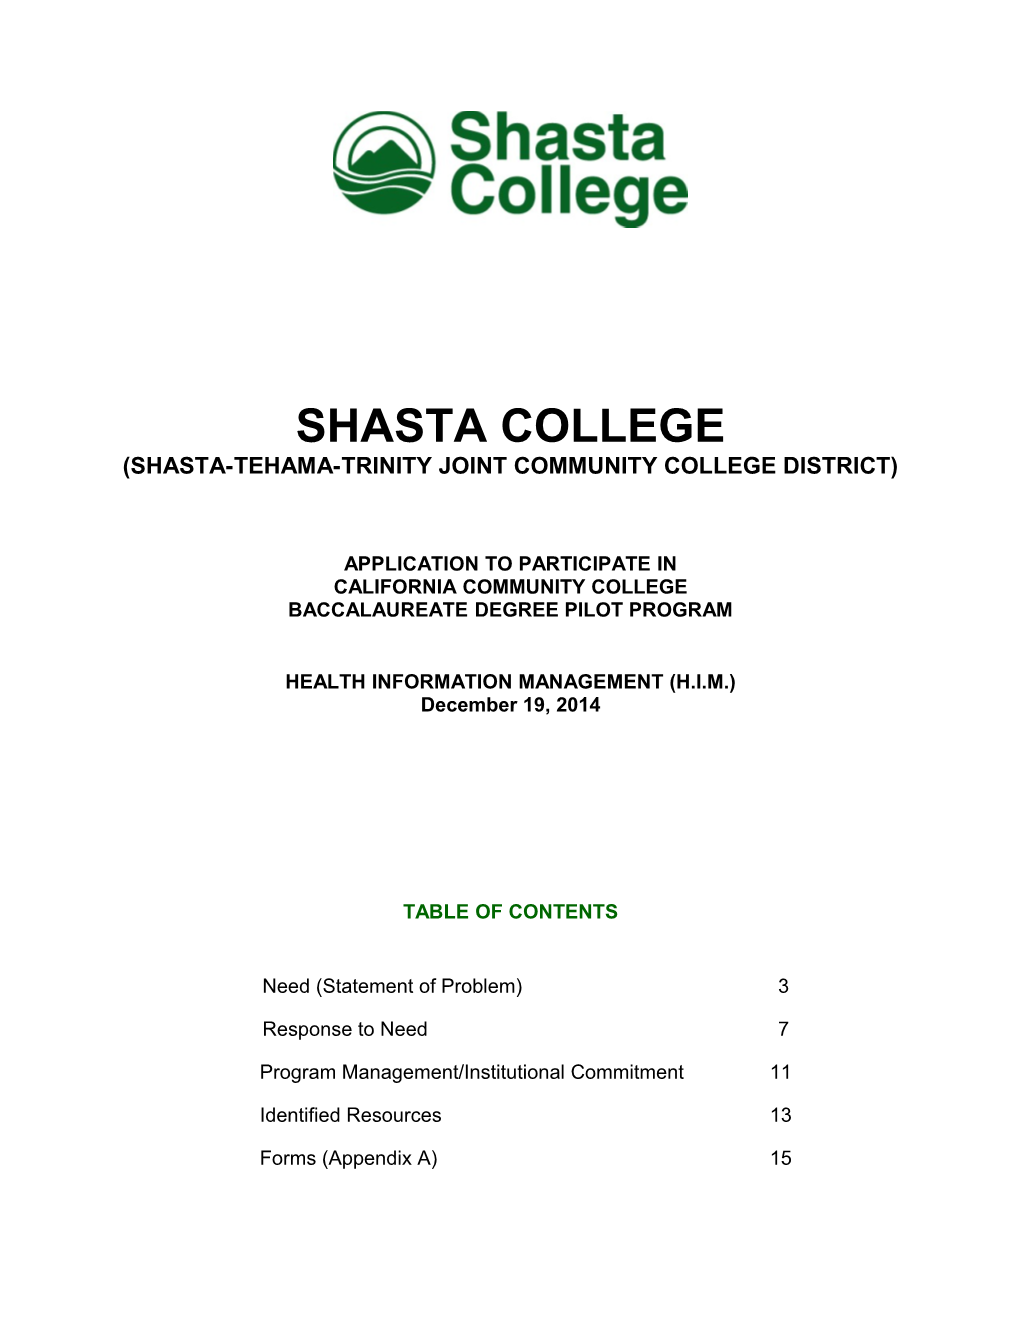 Shasta-Tehama-Trinity Joint Community College District